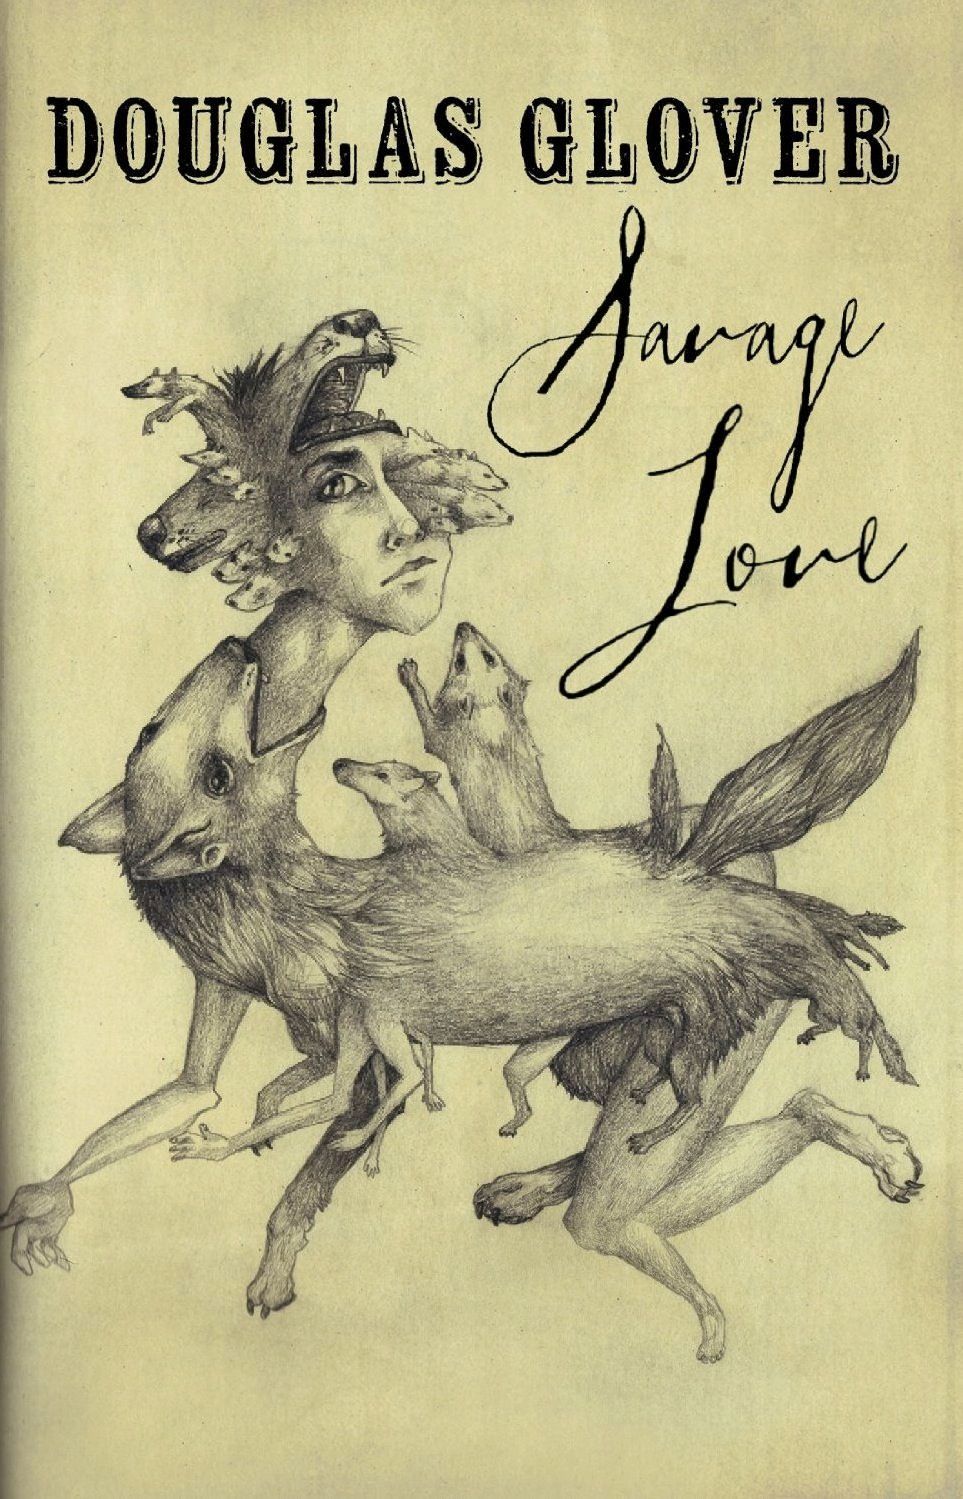 An Anatomy of Story: Douglas Glover’s "Savage Love"